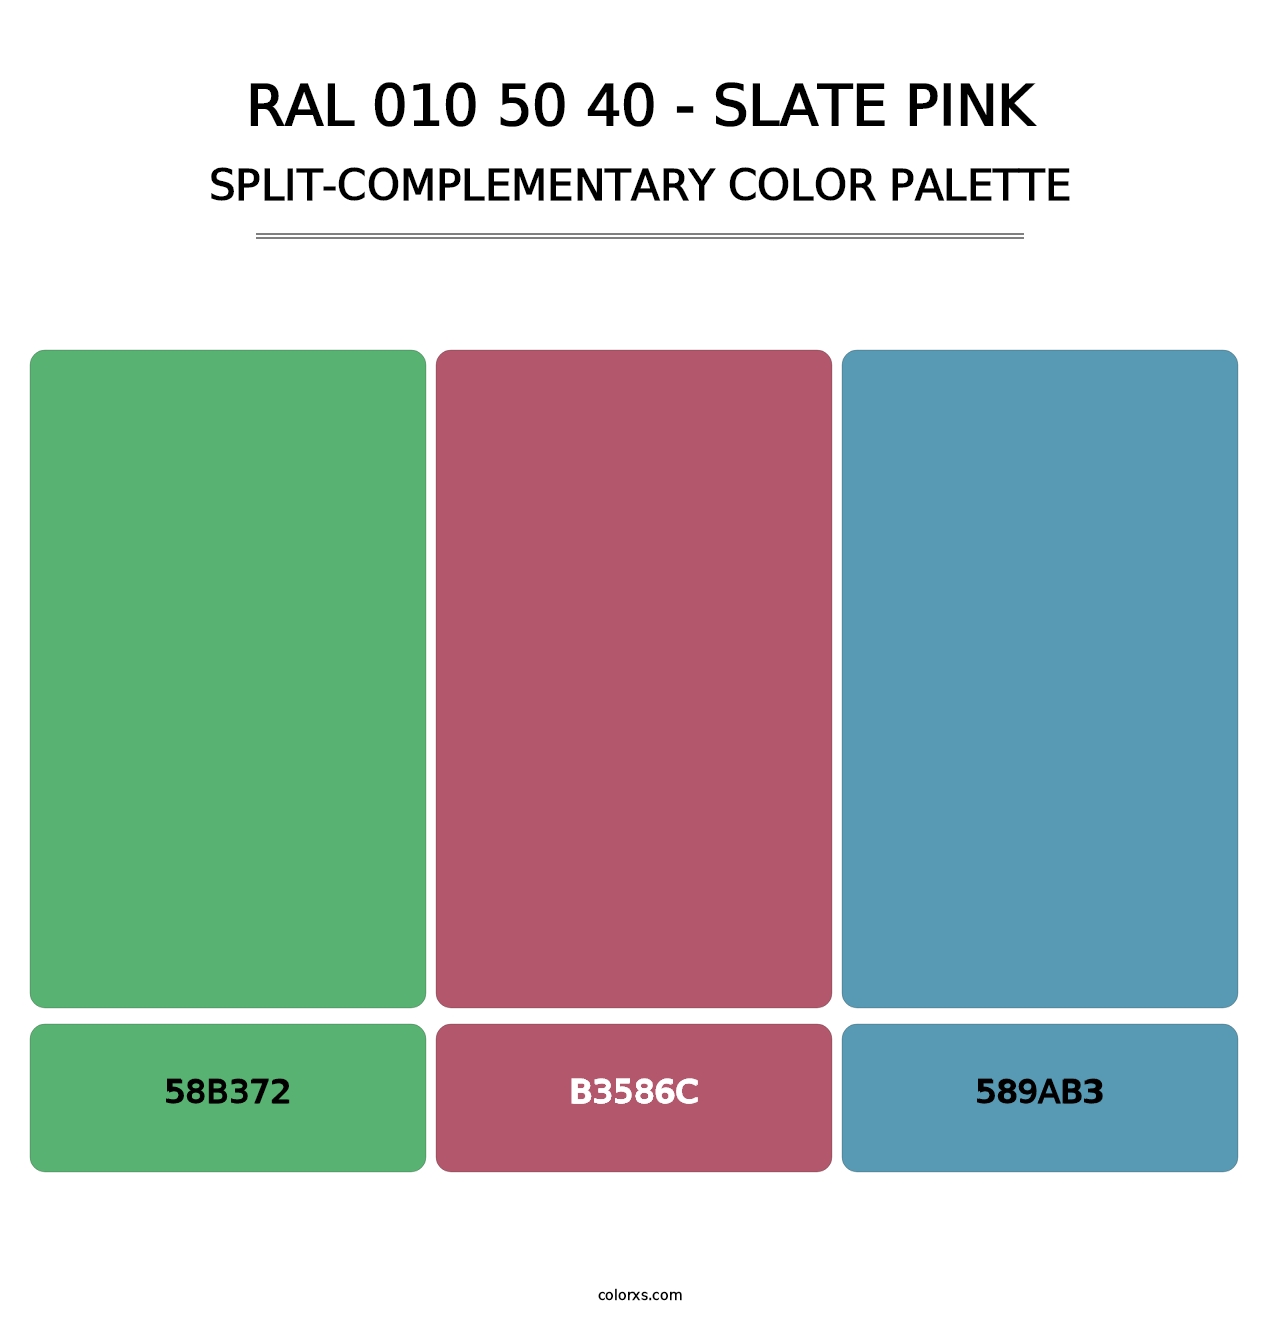 RAL 010 50 40 - Slate Pink - Split-Complementary Color Palette